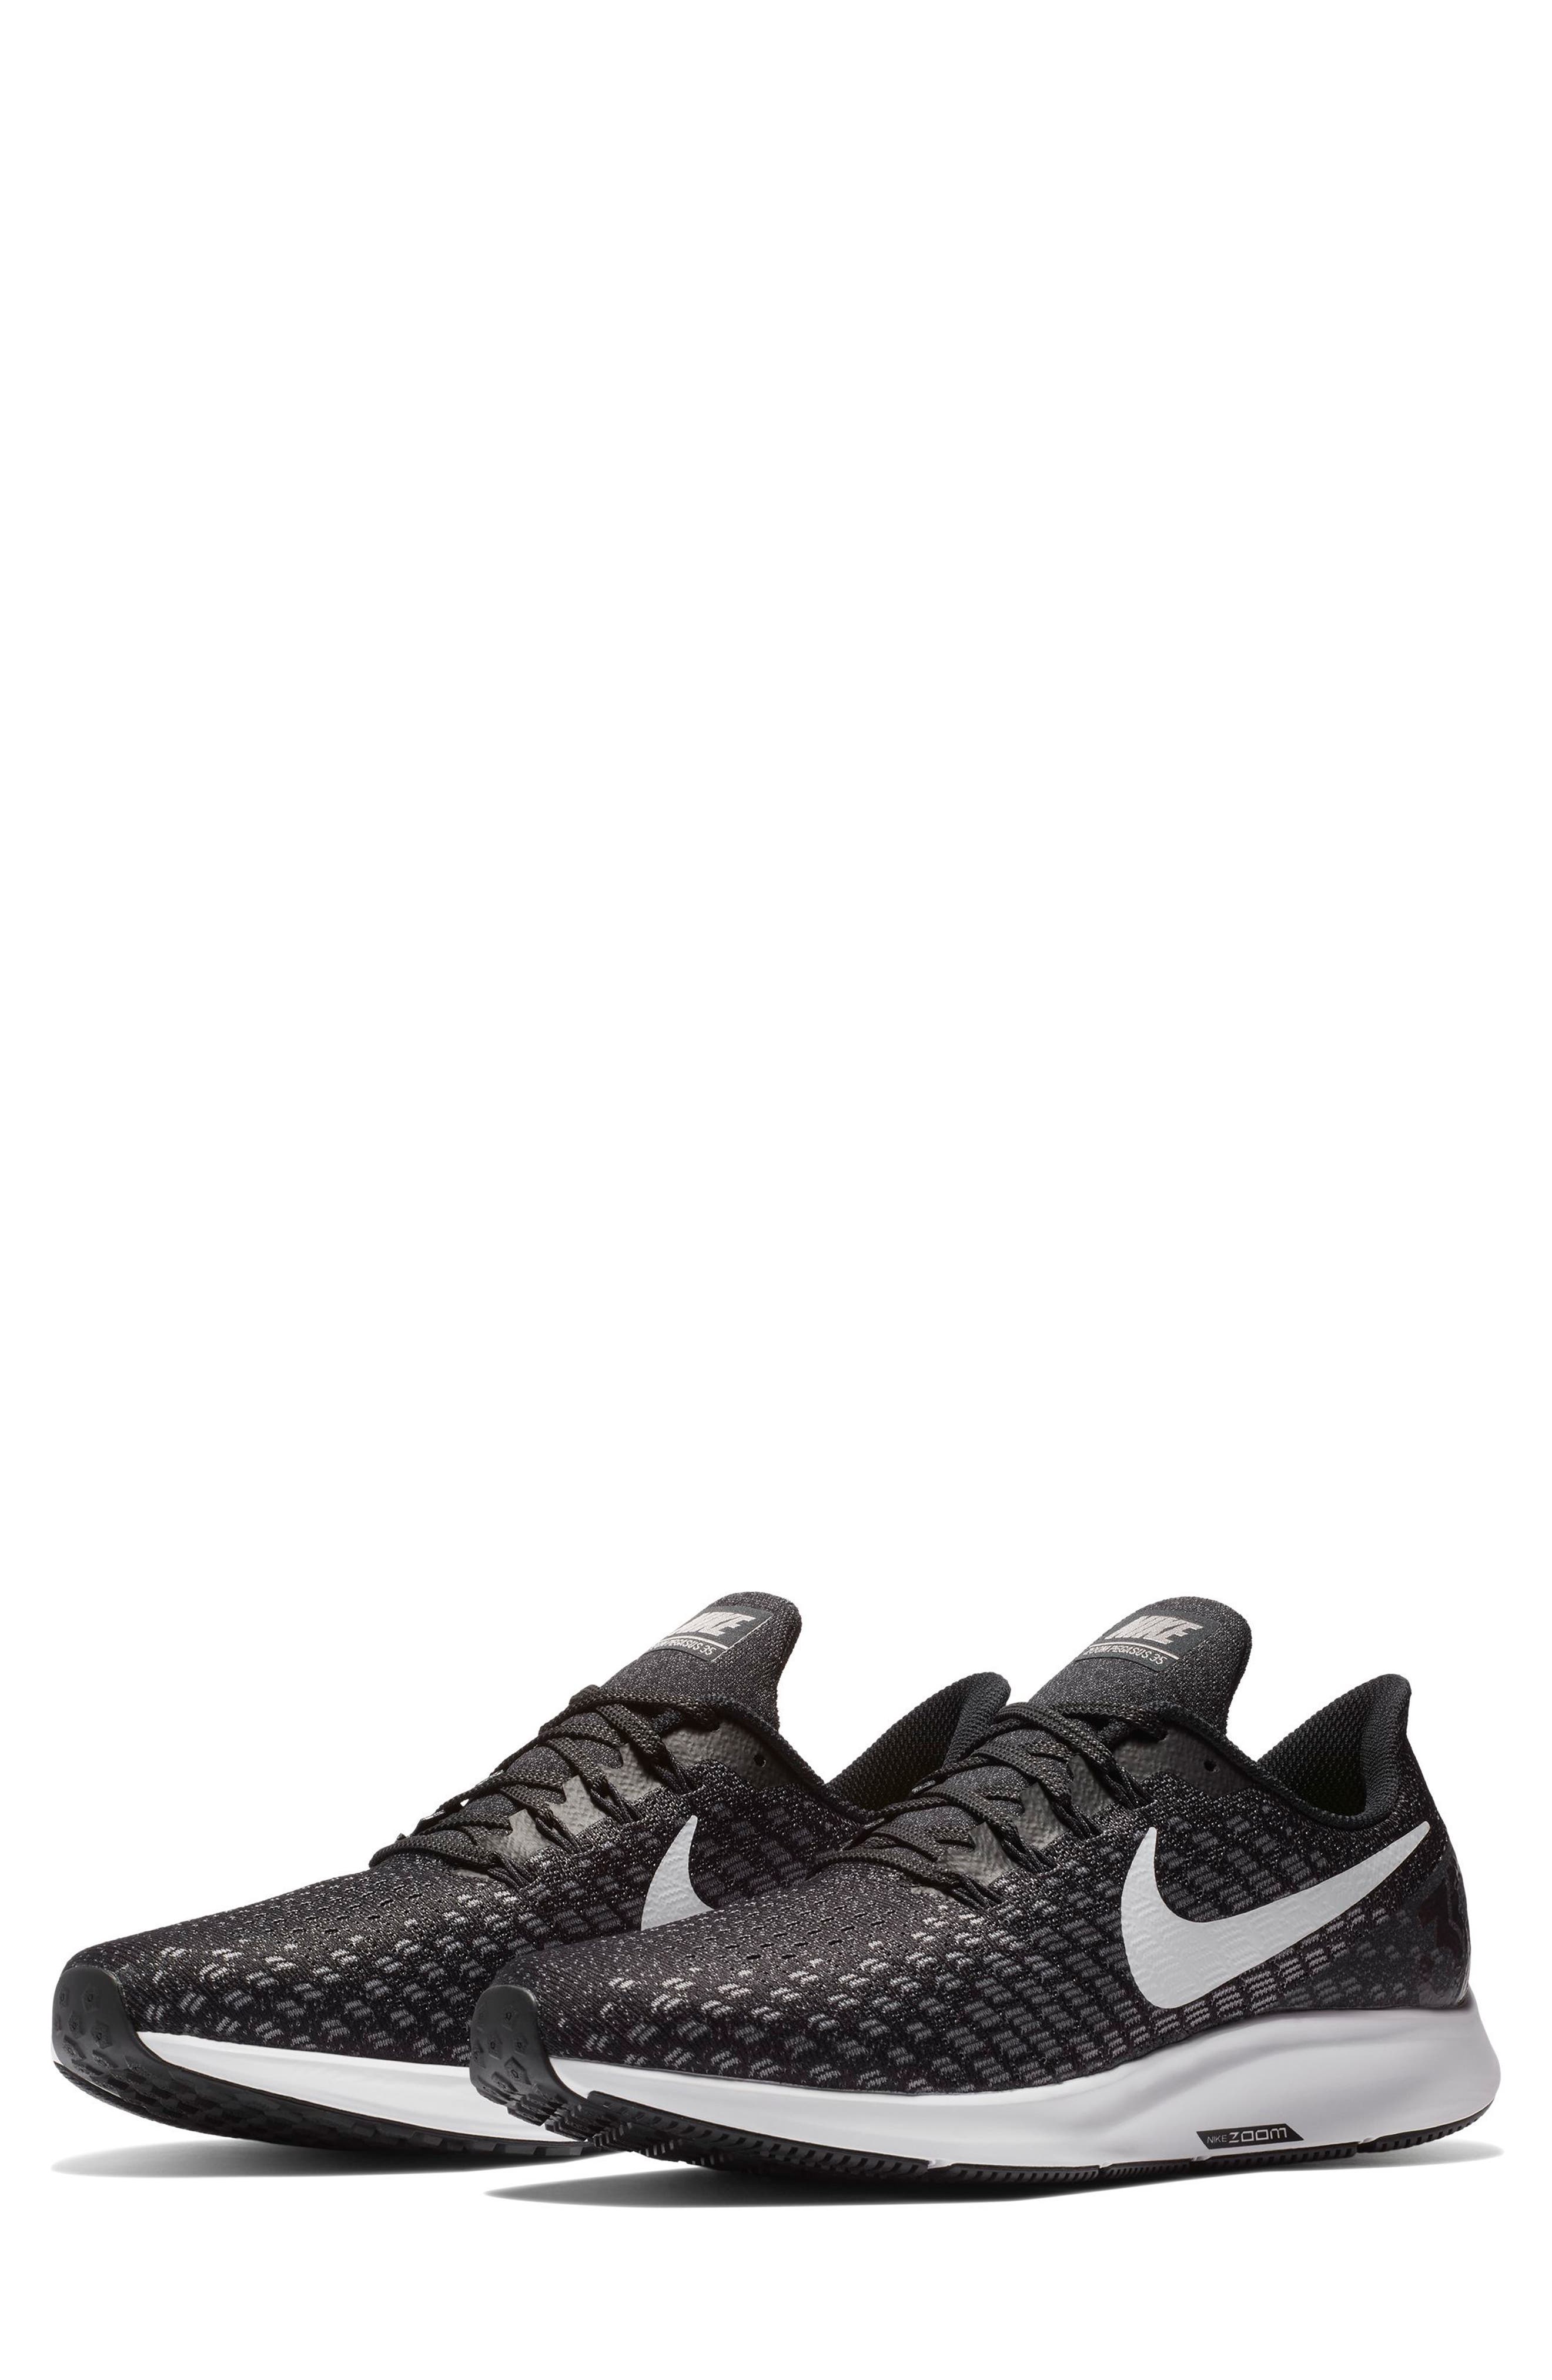 UPC 666032743294 product image for Men's Nike Air Zoom Pegasus 35 Running Shoe, Size 8 M - Black | upcitemdb.com